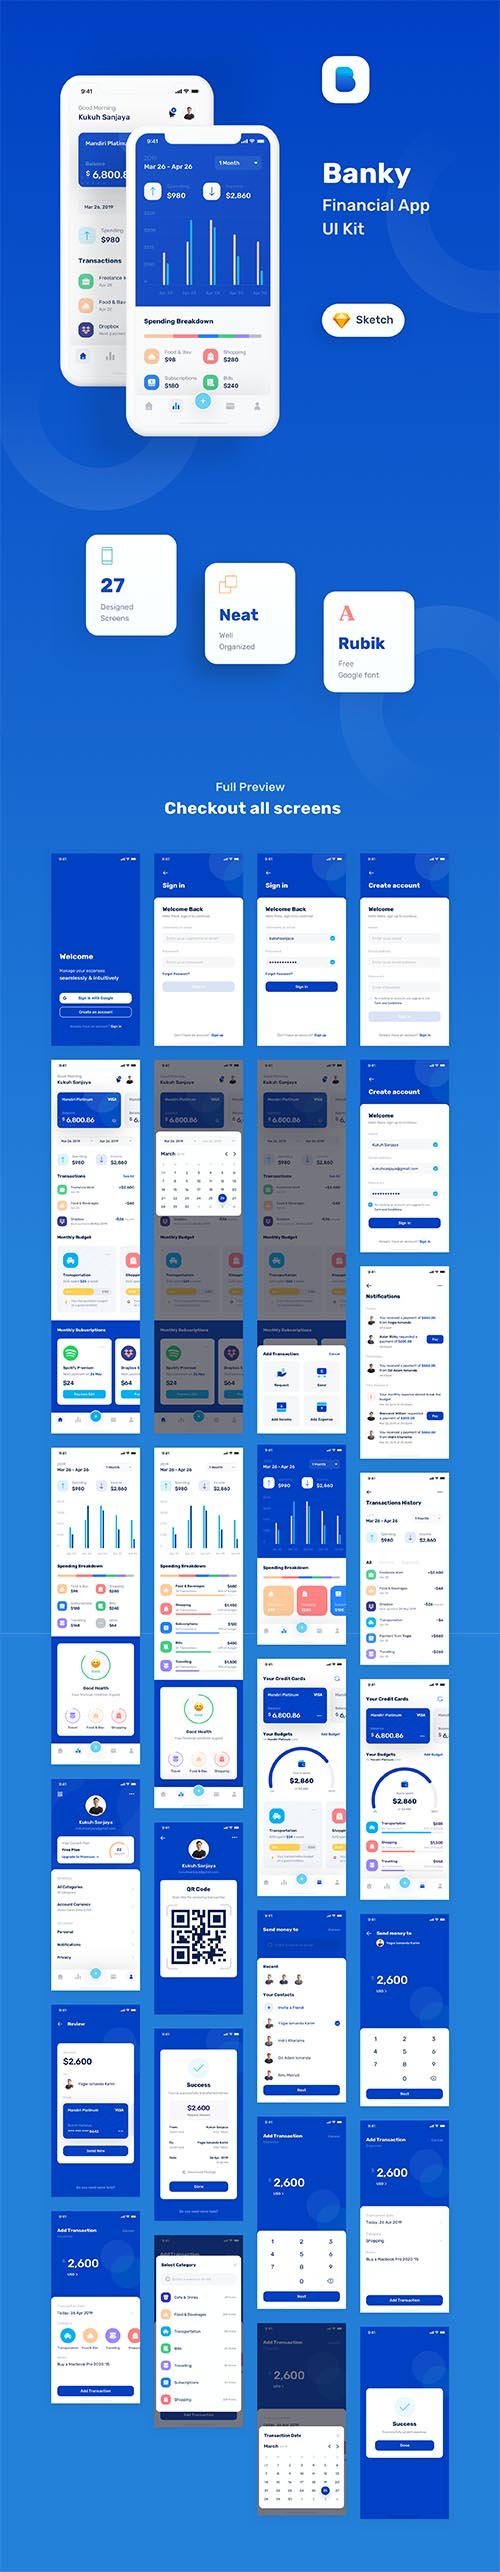 UI8 - Banky - Finance App UI Kit